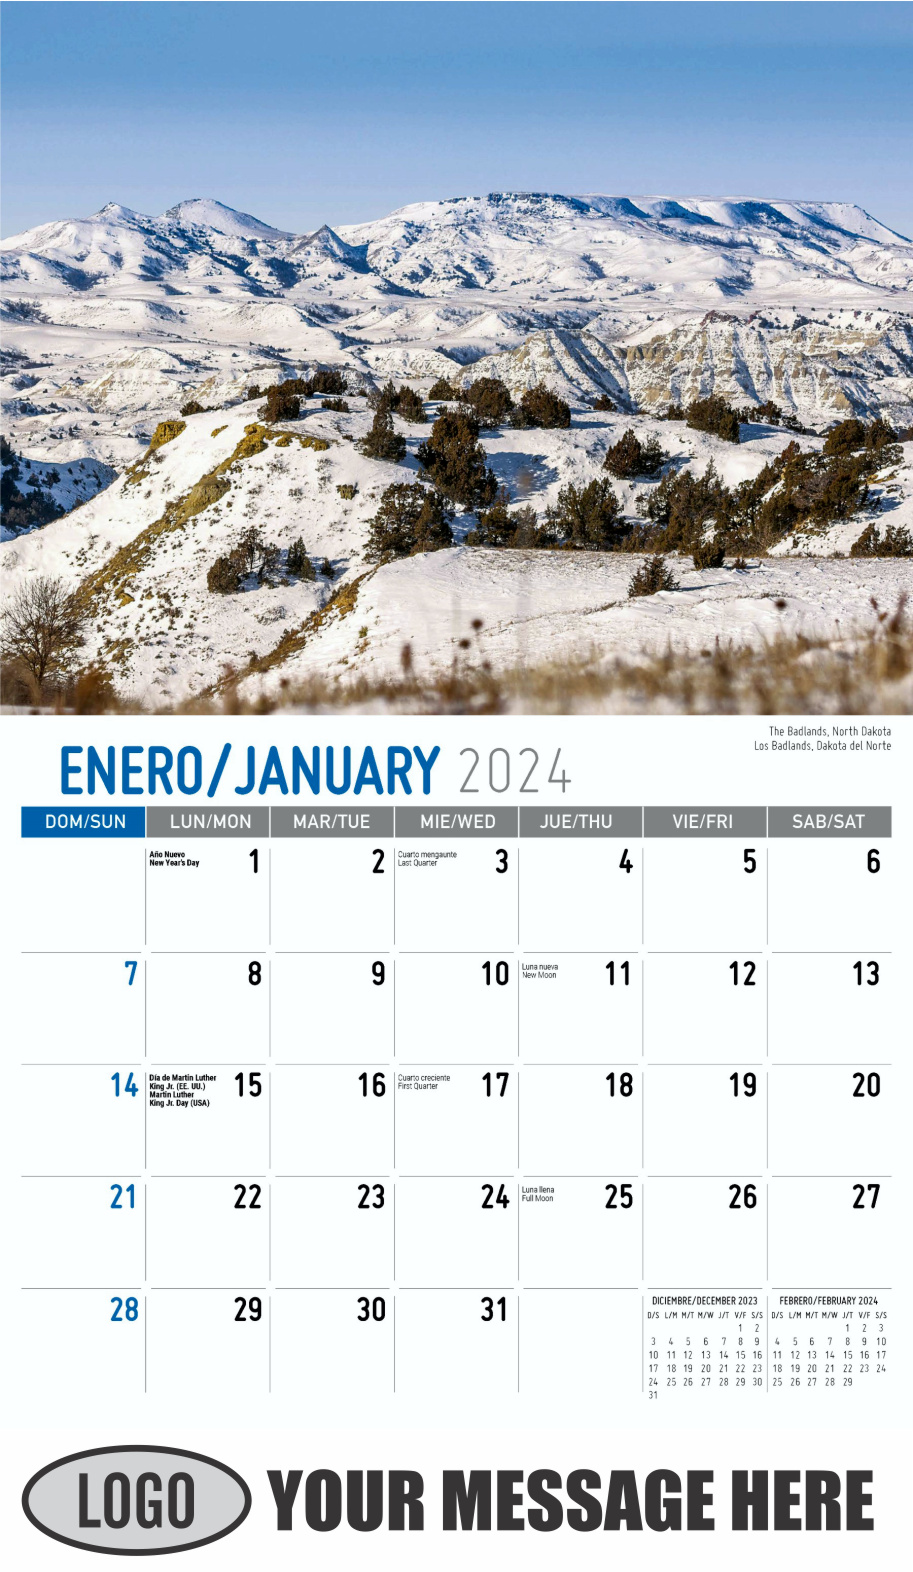 Scenes of America 2024 Bilingual Business Promo Calendar - January